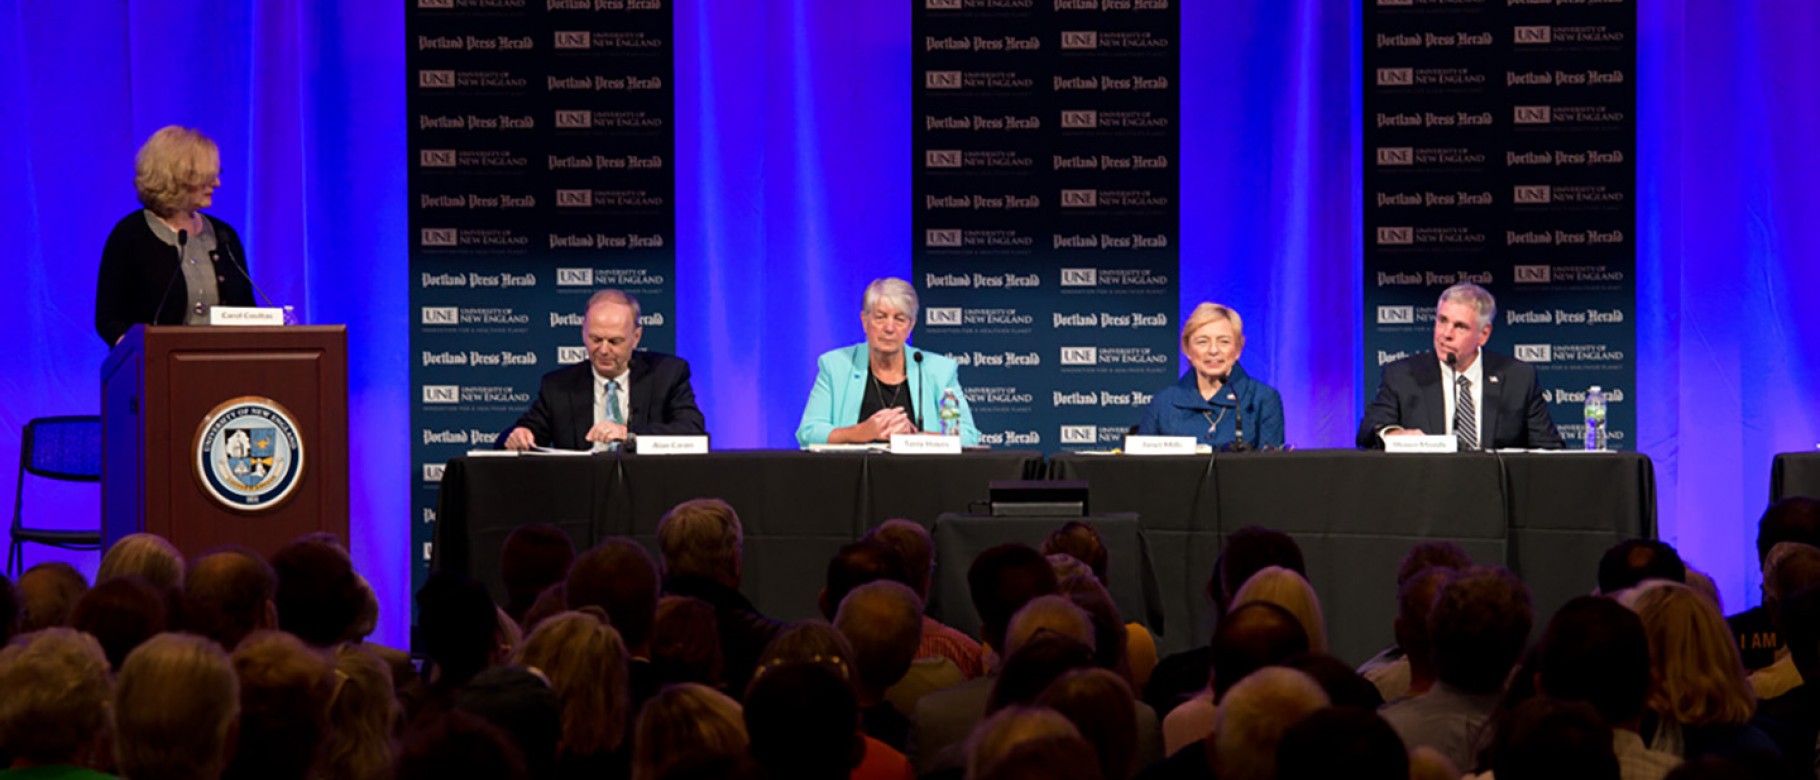 University of New England and 'Portland Press Herald' host gubernatorial debate